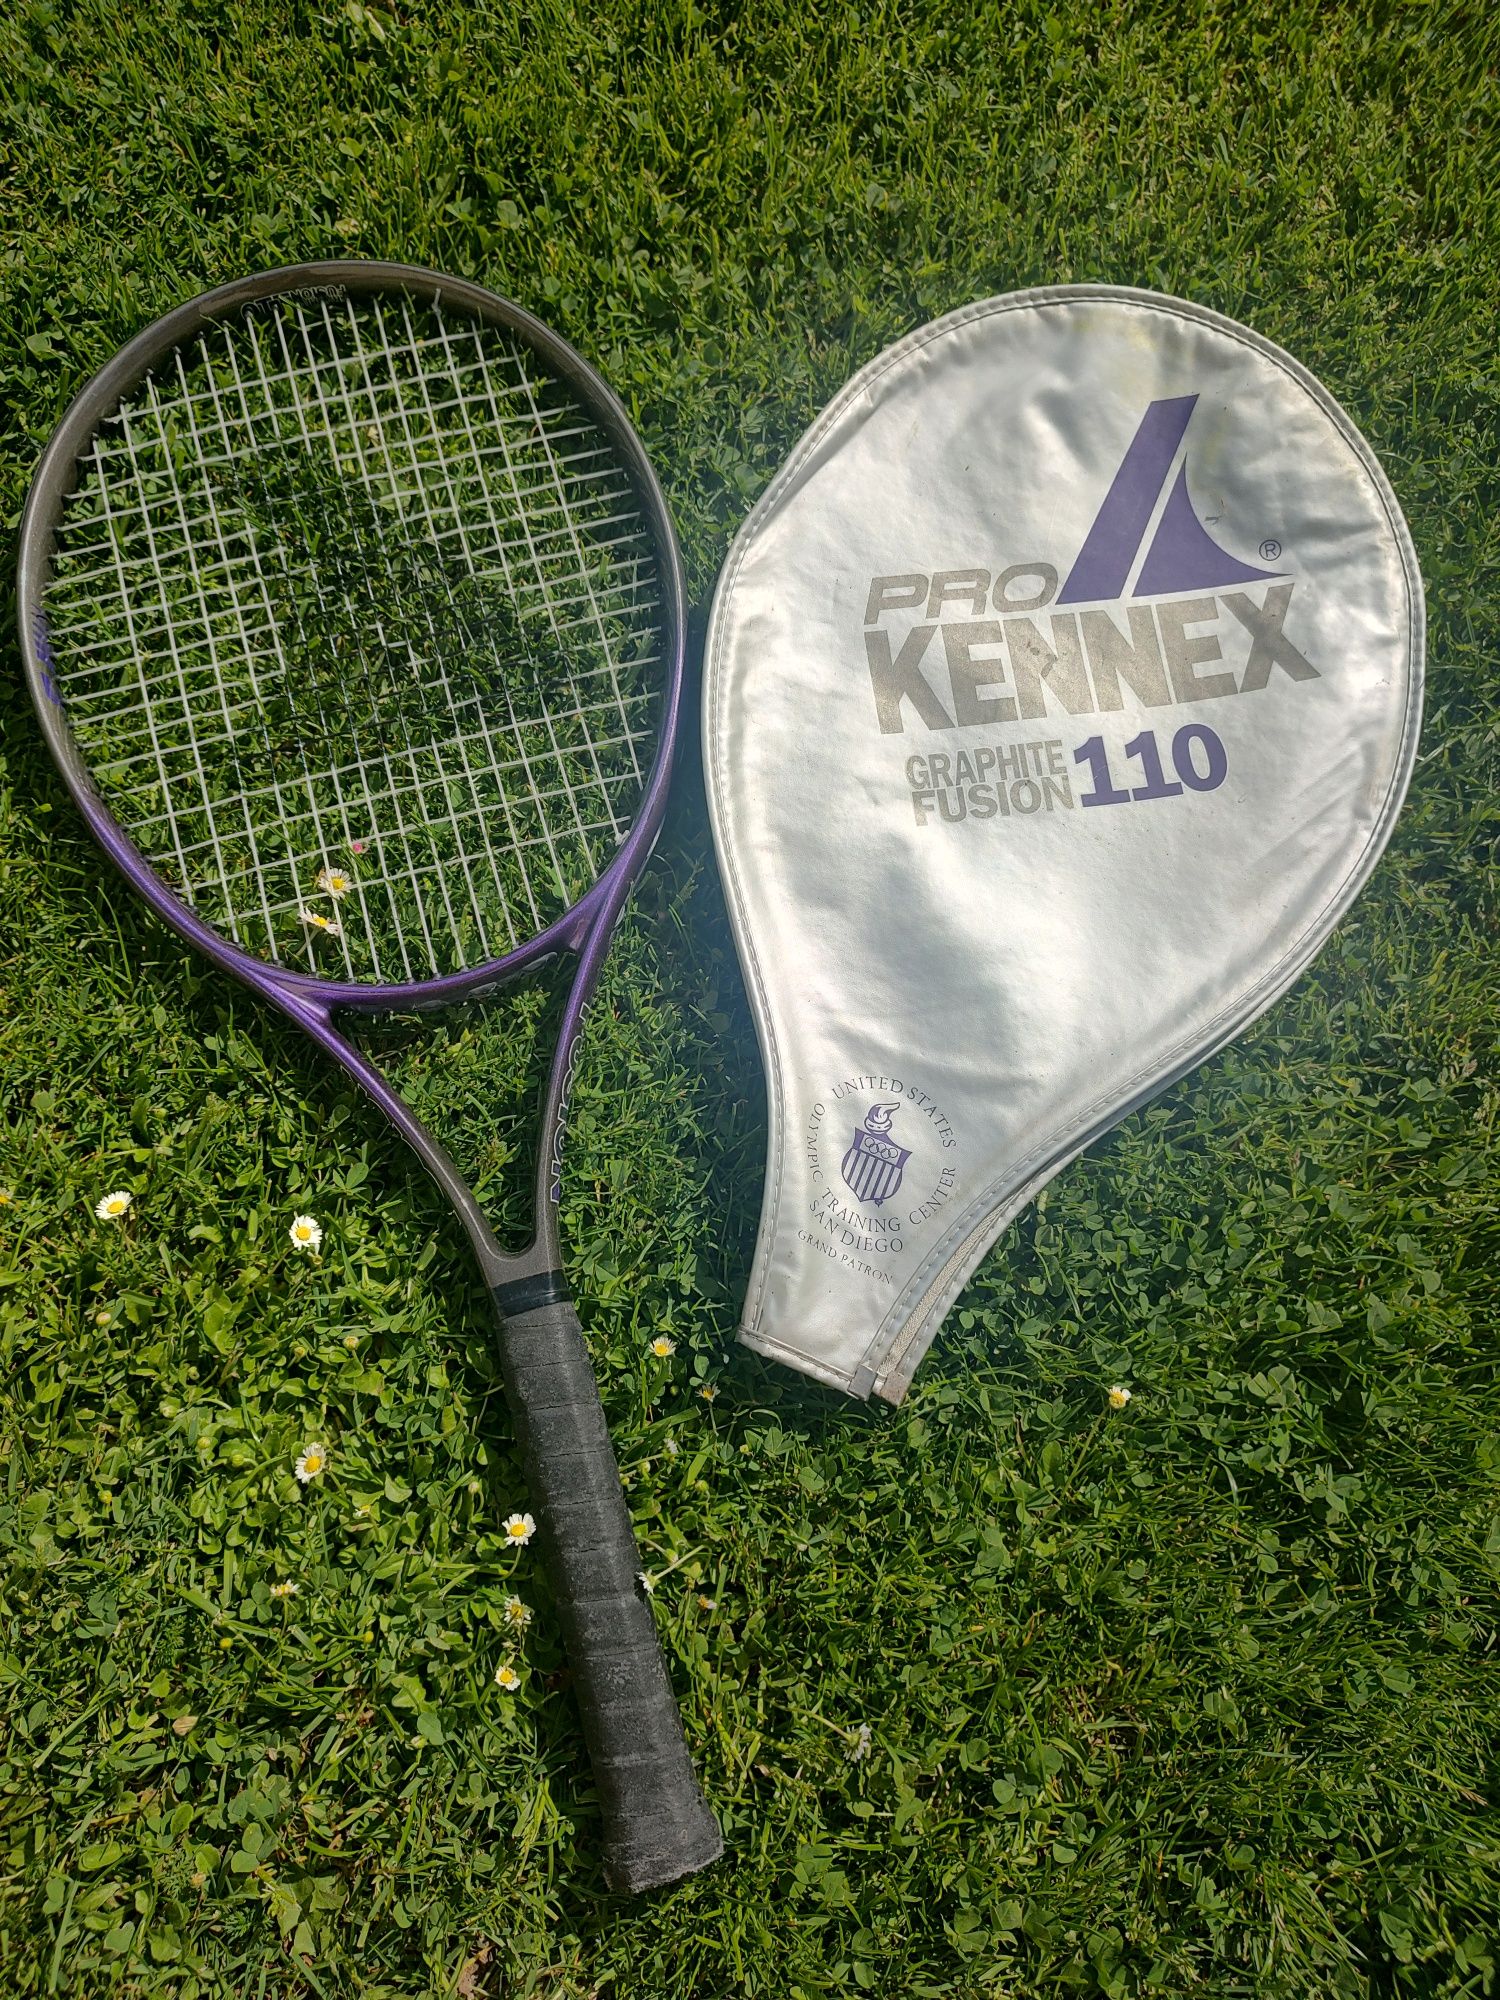 Paletą to tenisa ziemnego Kennex Pro